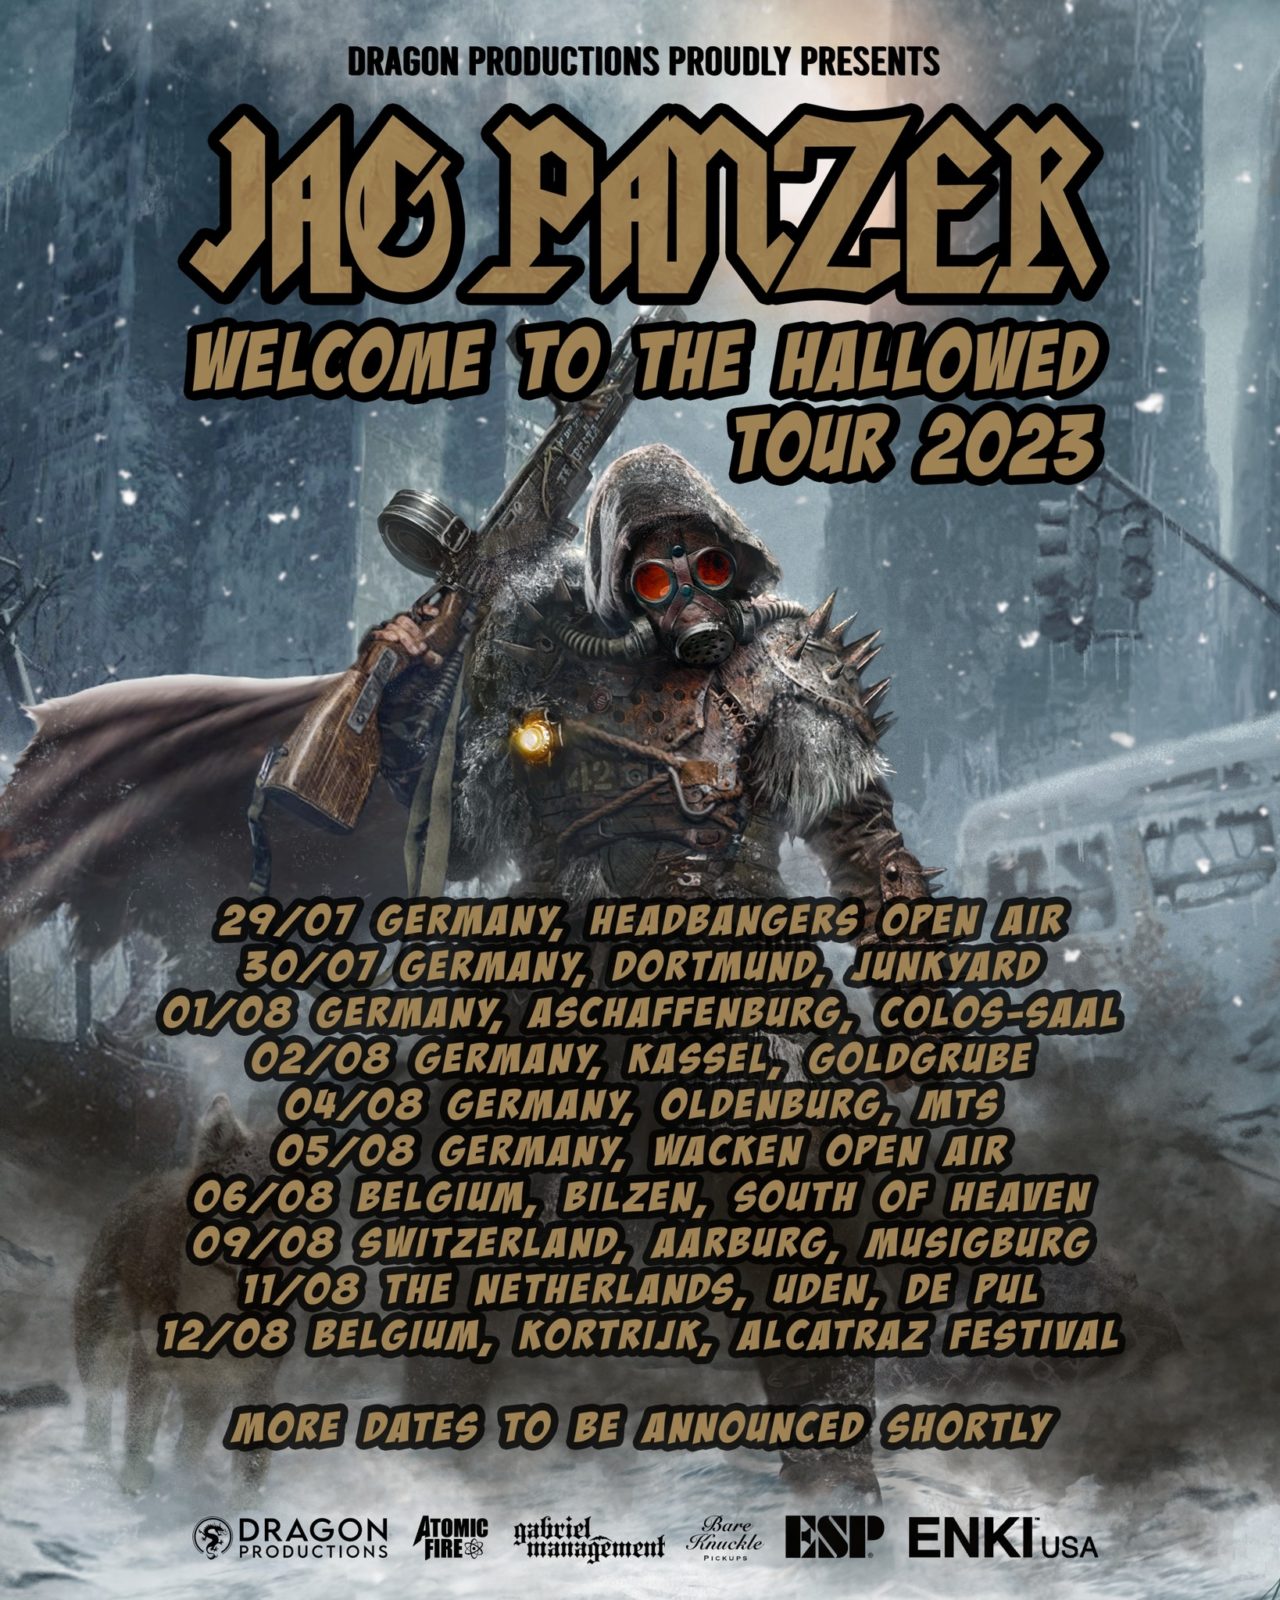 jag-panzer-tour-2023-1280x1600.jpg